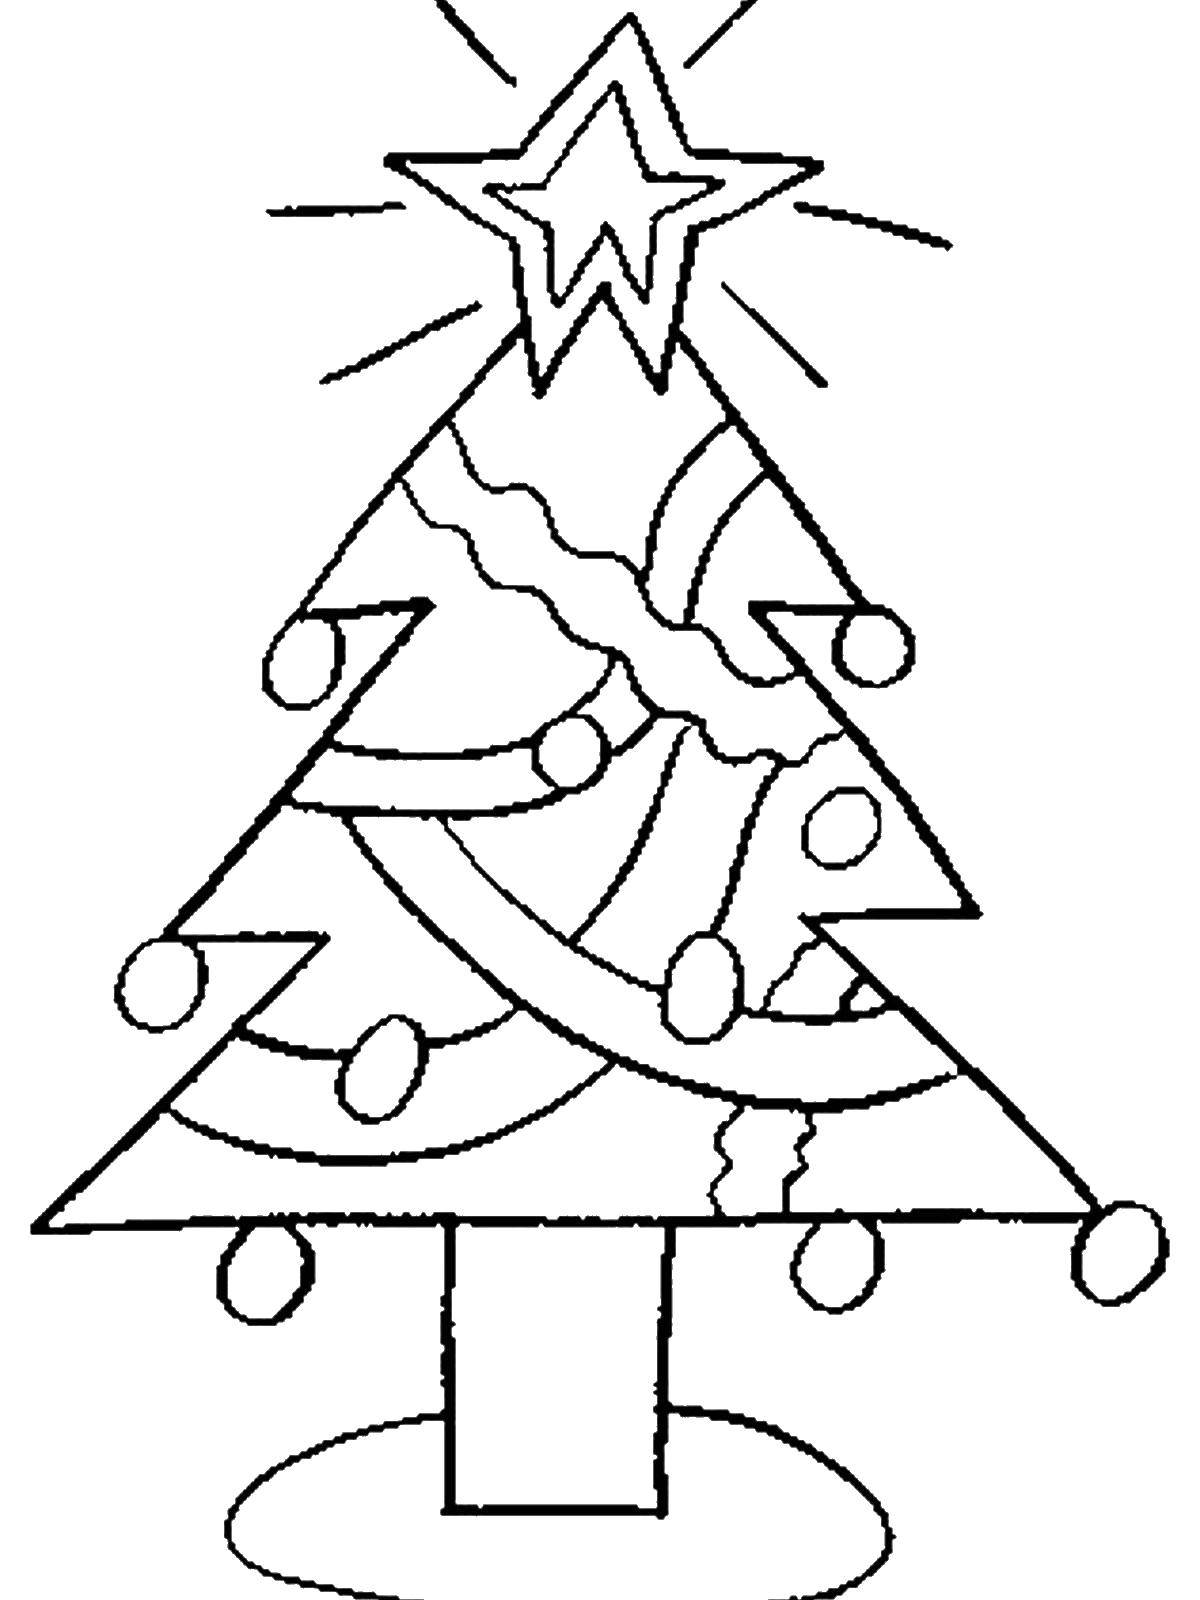 Название: Раскраска Новогодная елка. Категория: раскраски из фигур. Теги: Елка.